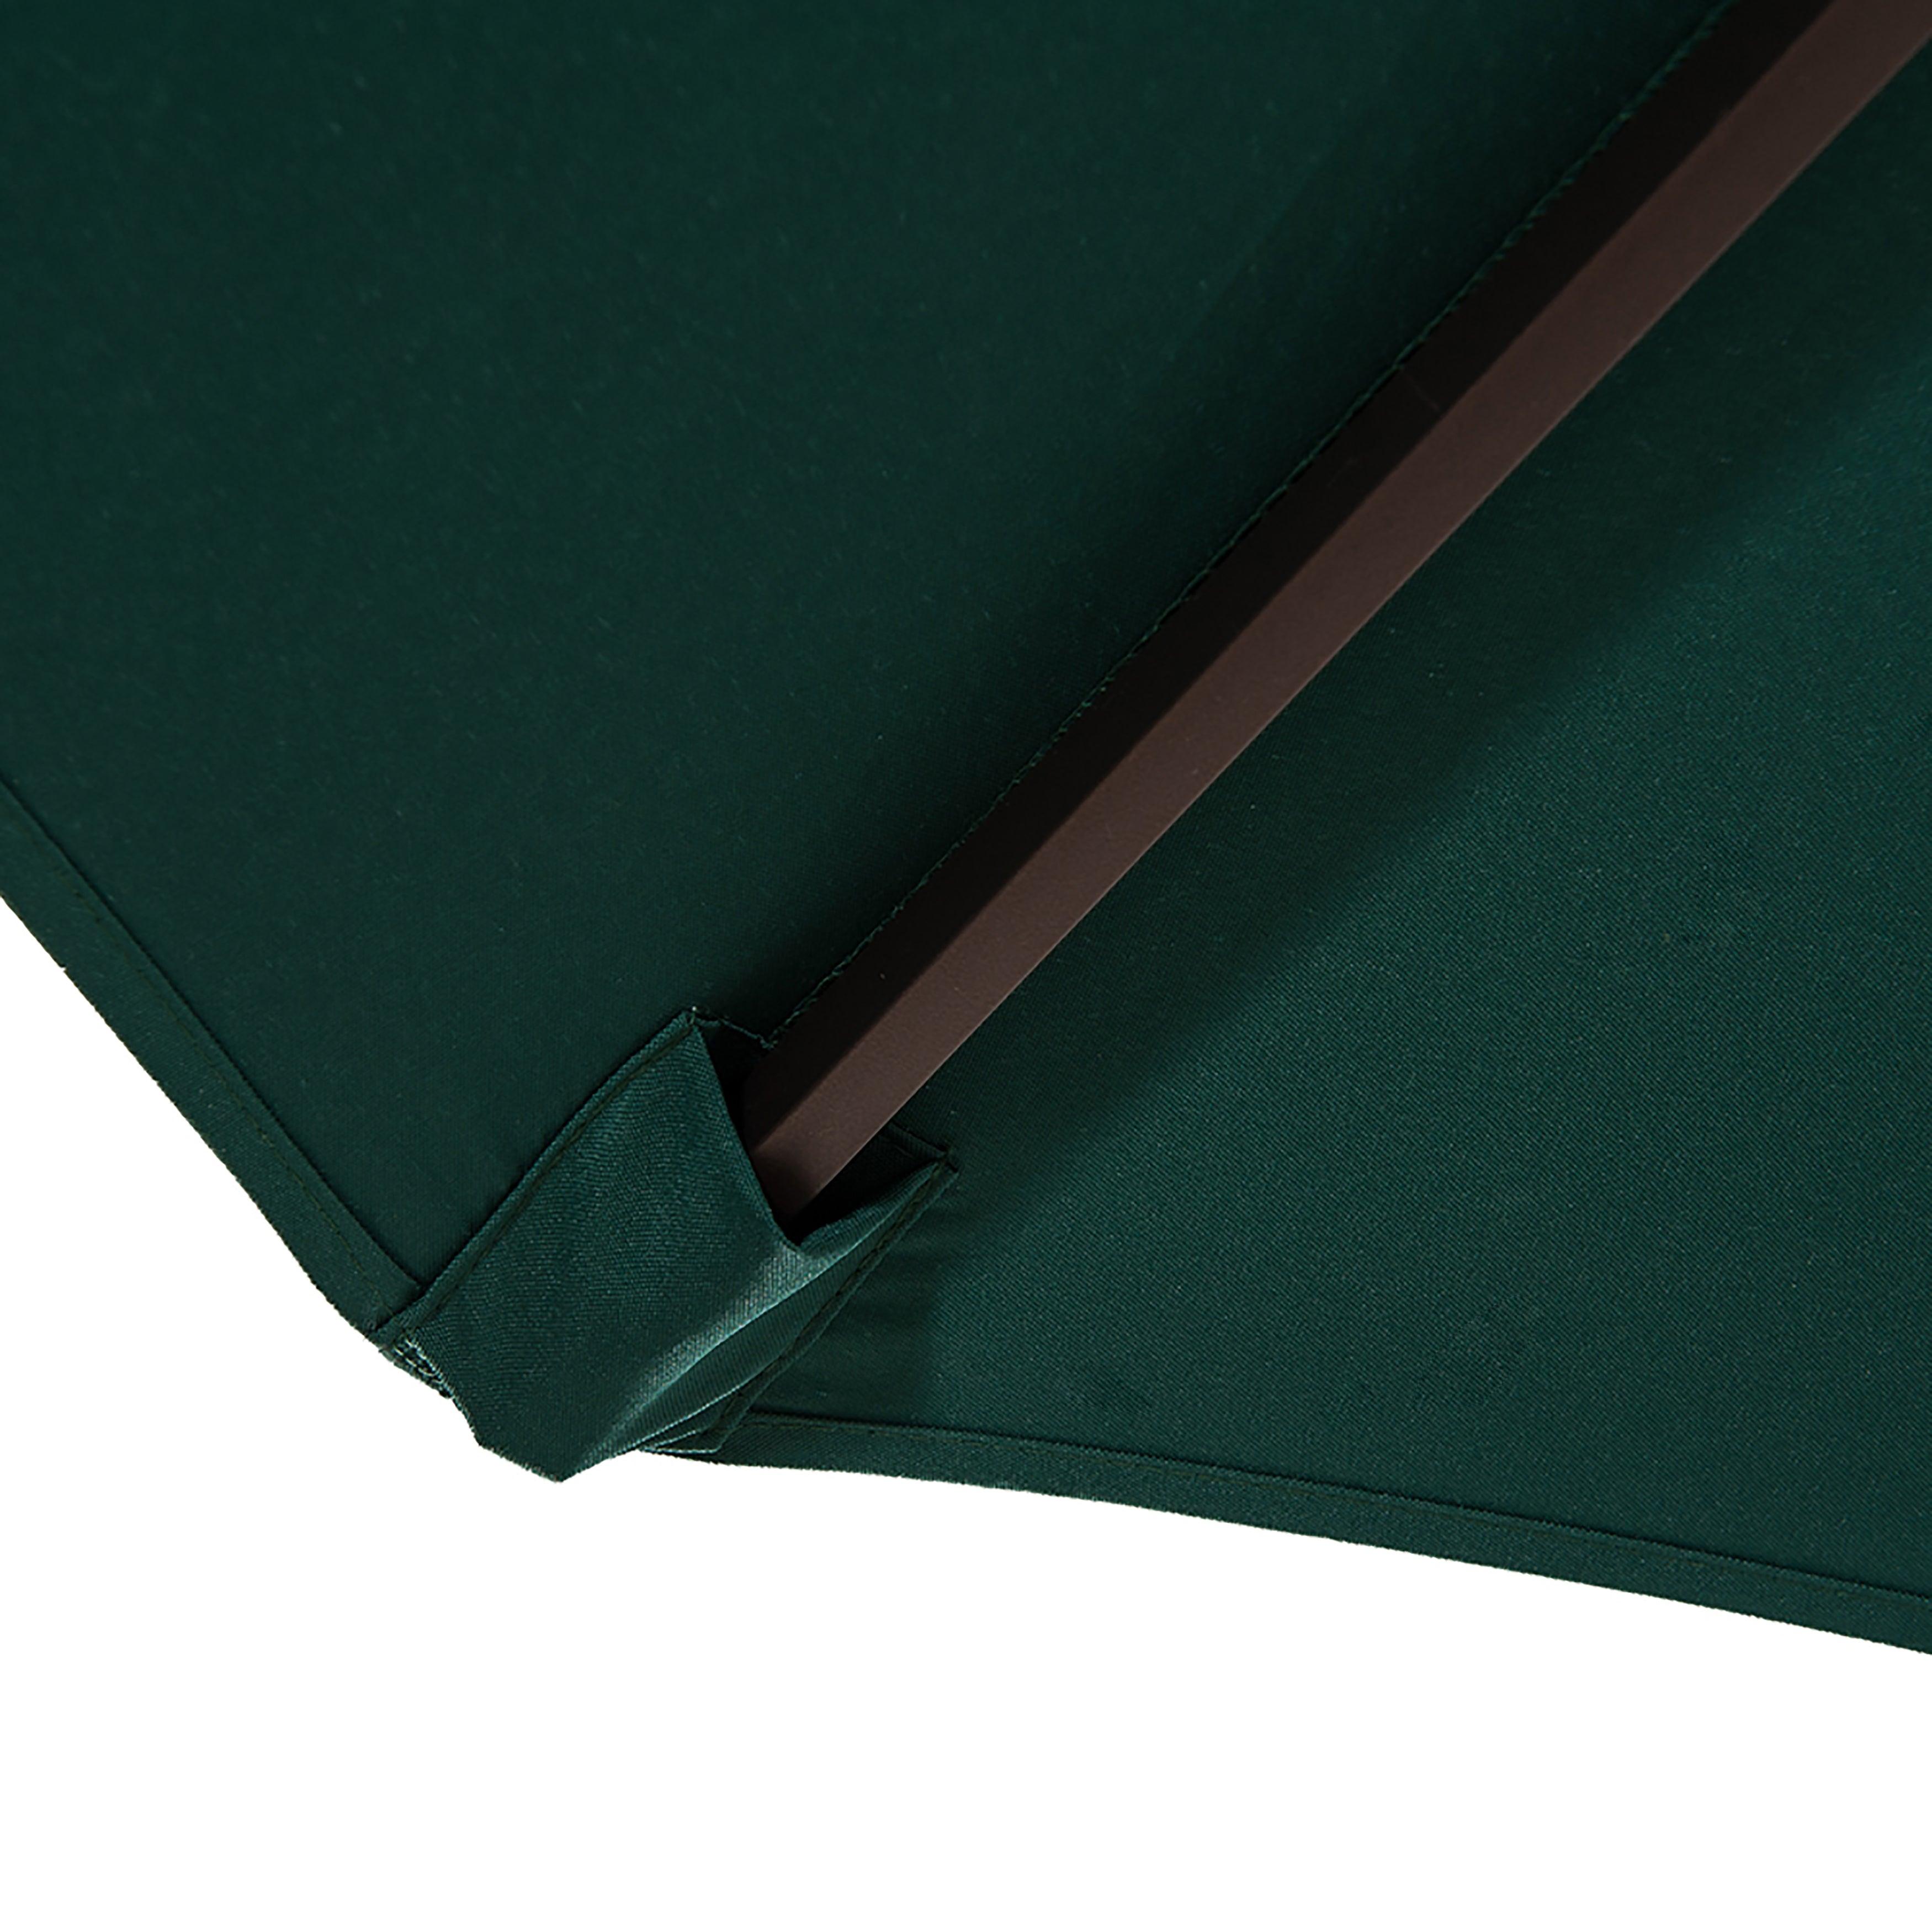 Elm 10 Ft Cantilever Offset Outdoor Patio Umbrella - Costaelm